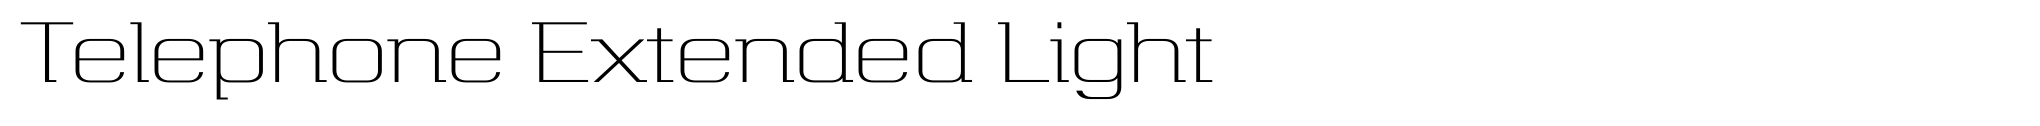 Telephone Extended Light image